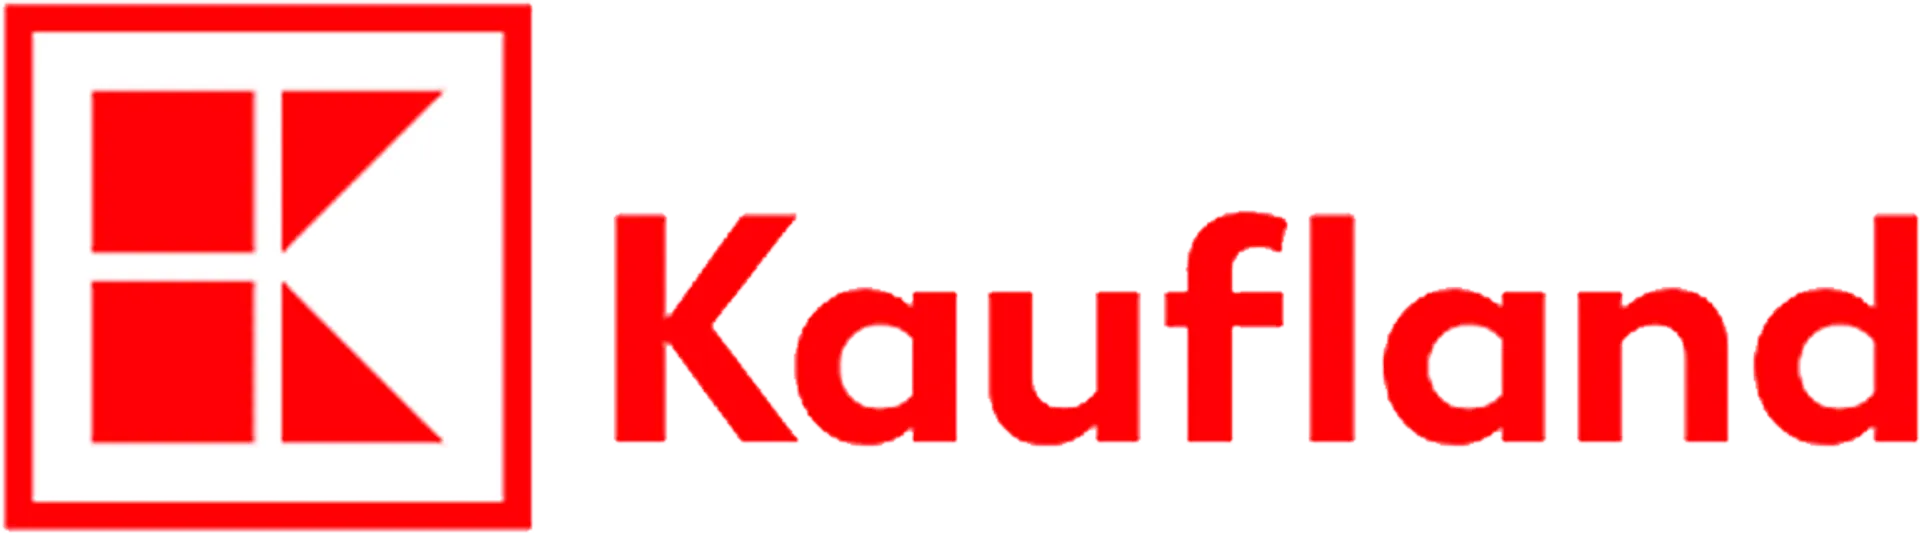 KAUFLAND logo